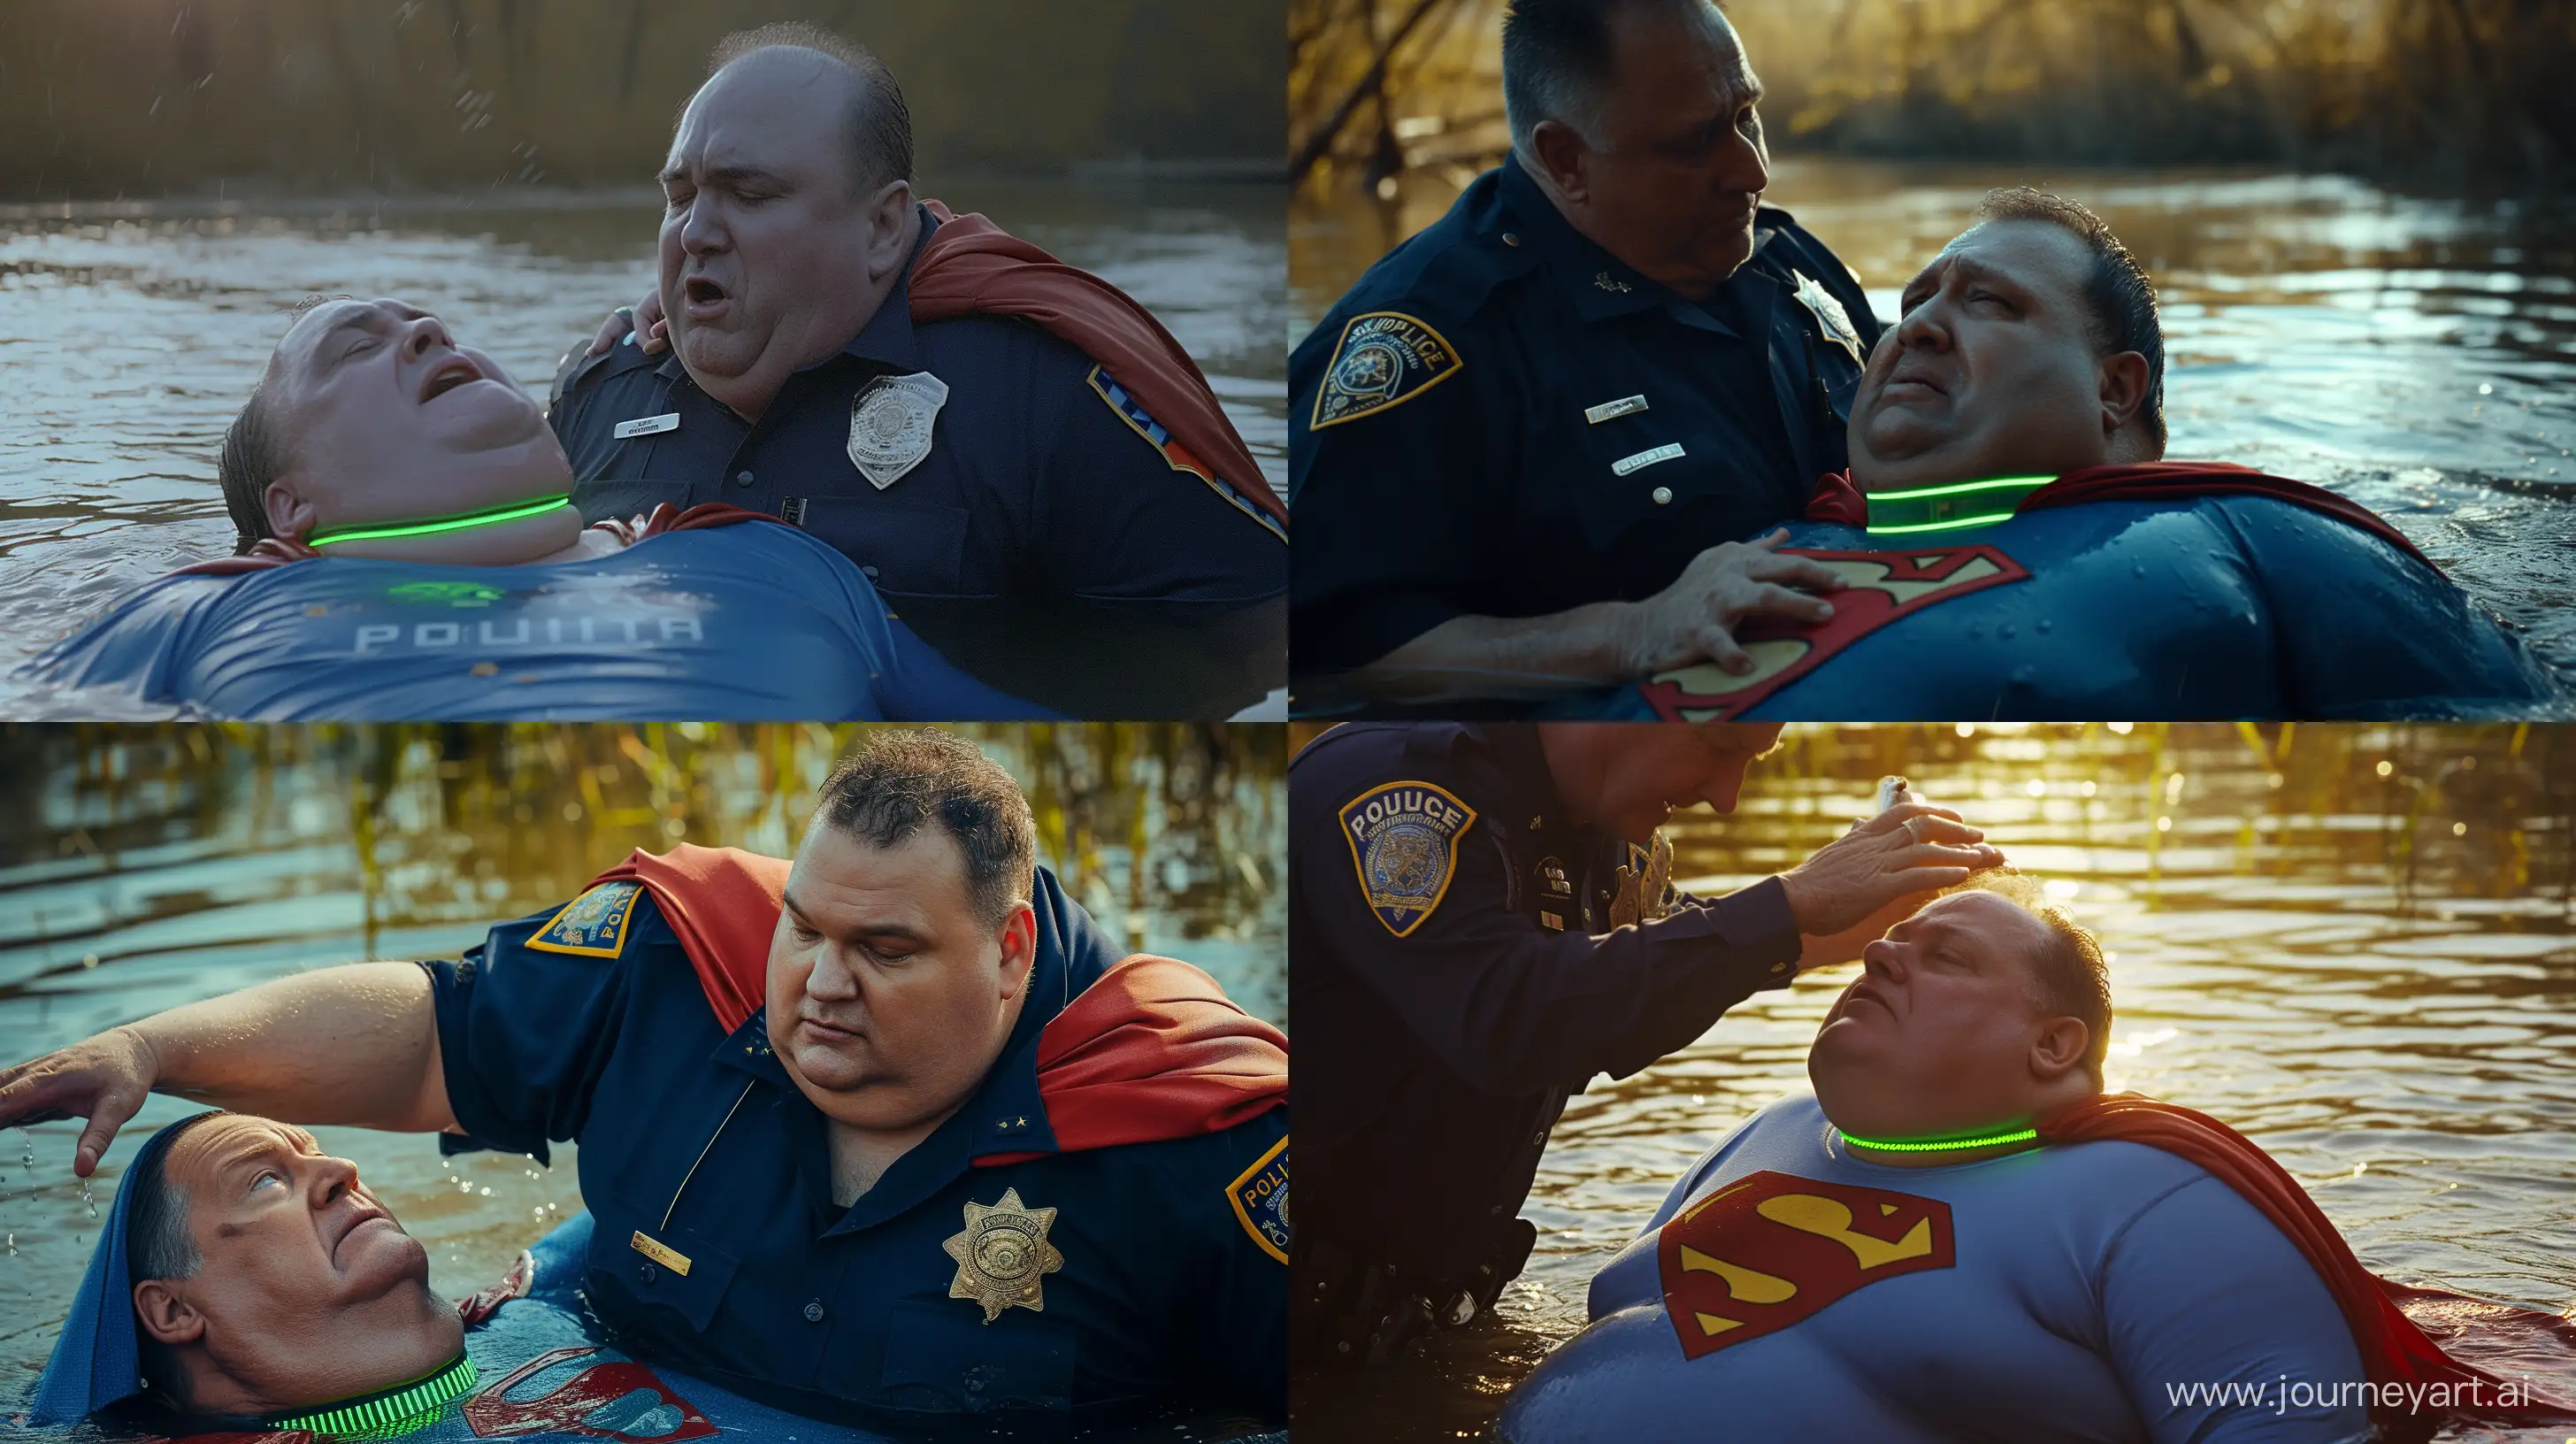 Elderly-Police-Officer-Assists-Stranded-Superhero-in-River-Rescue